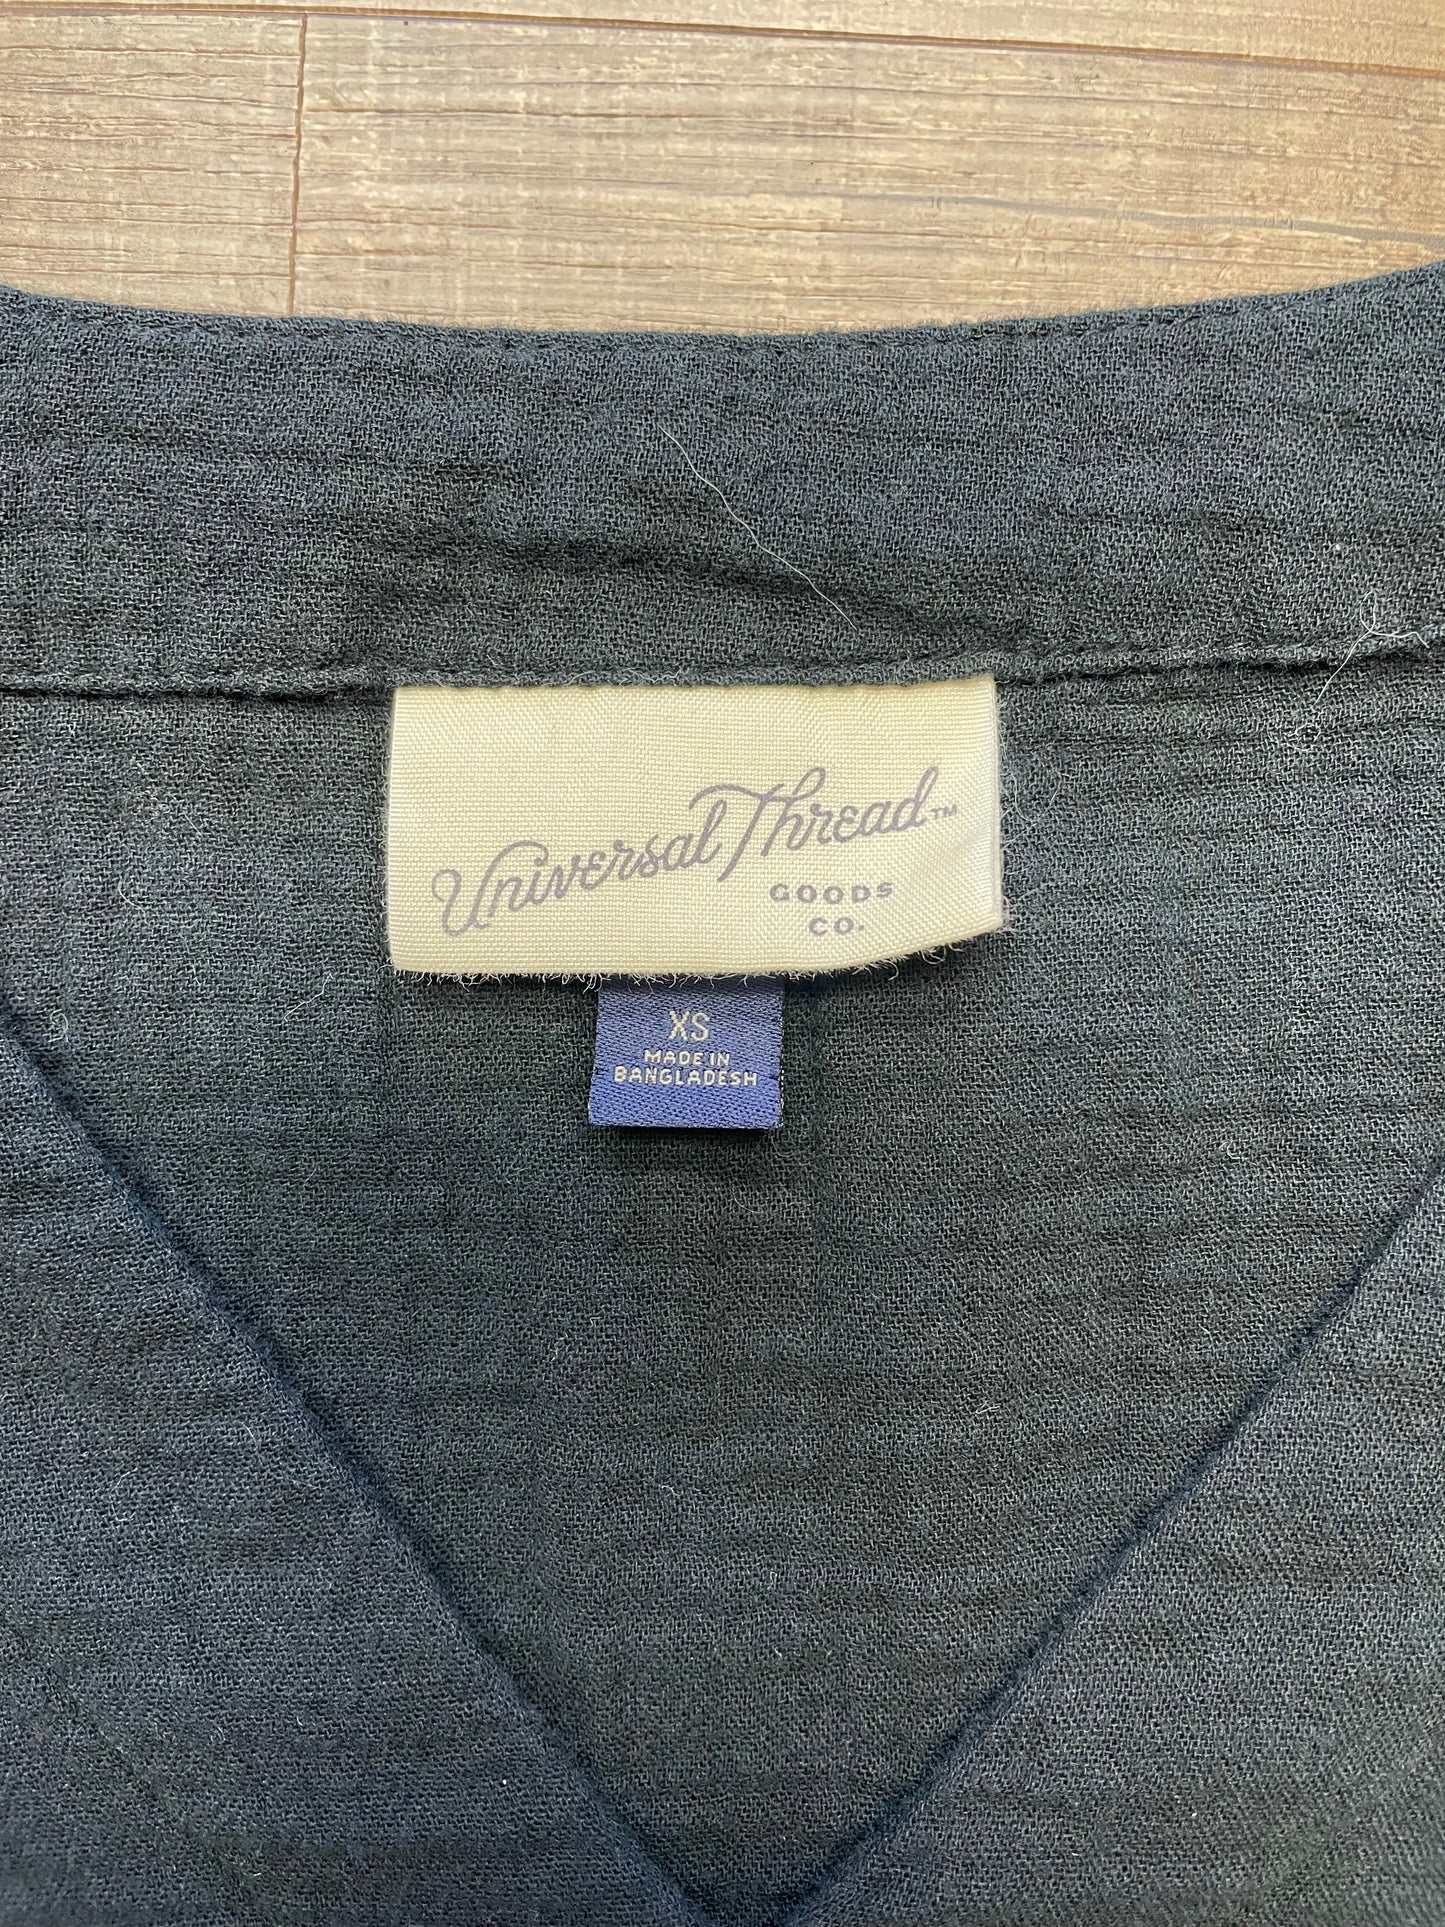 Universal Thread Shorts & Top (XS)